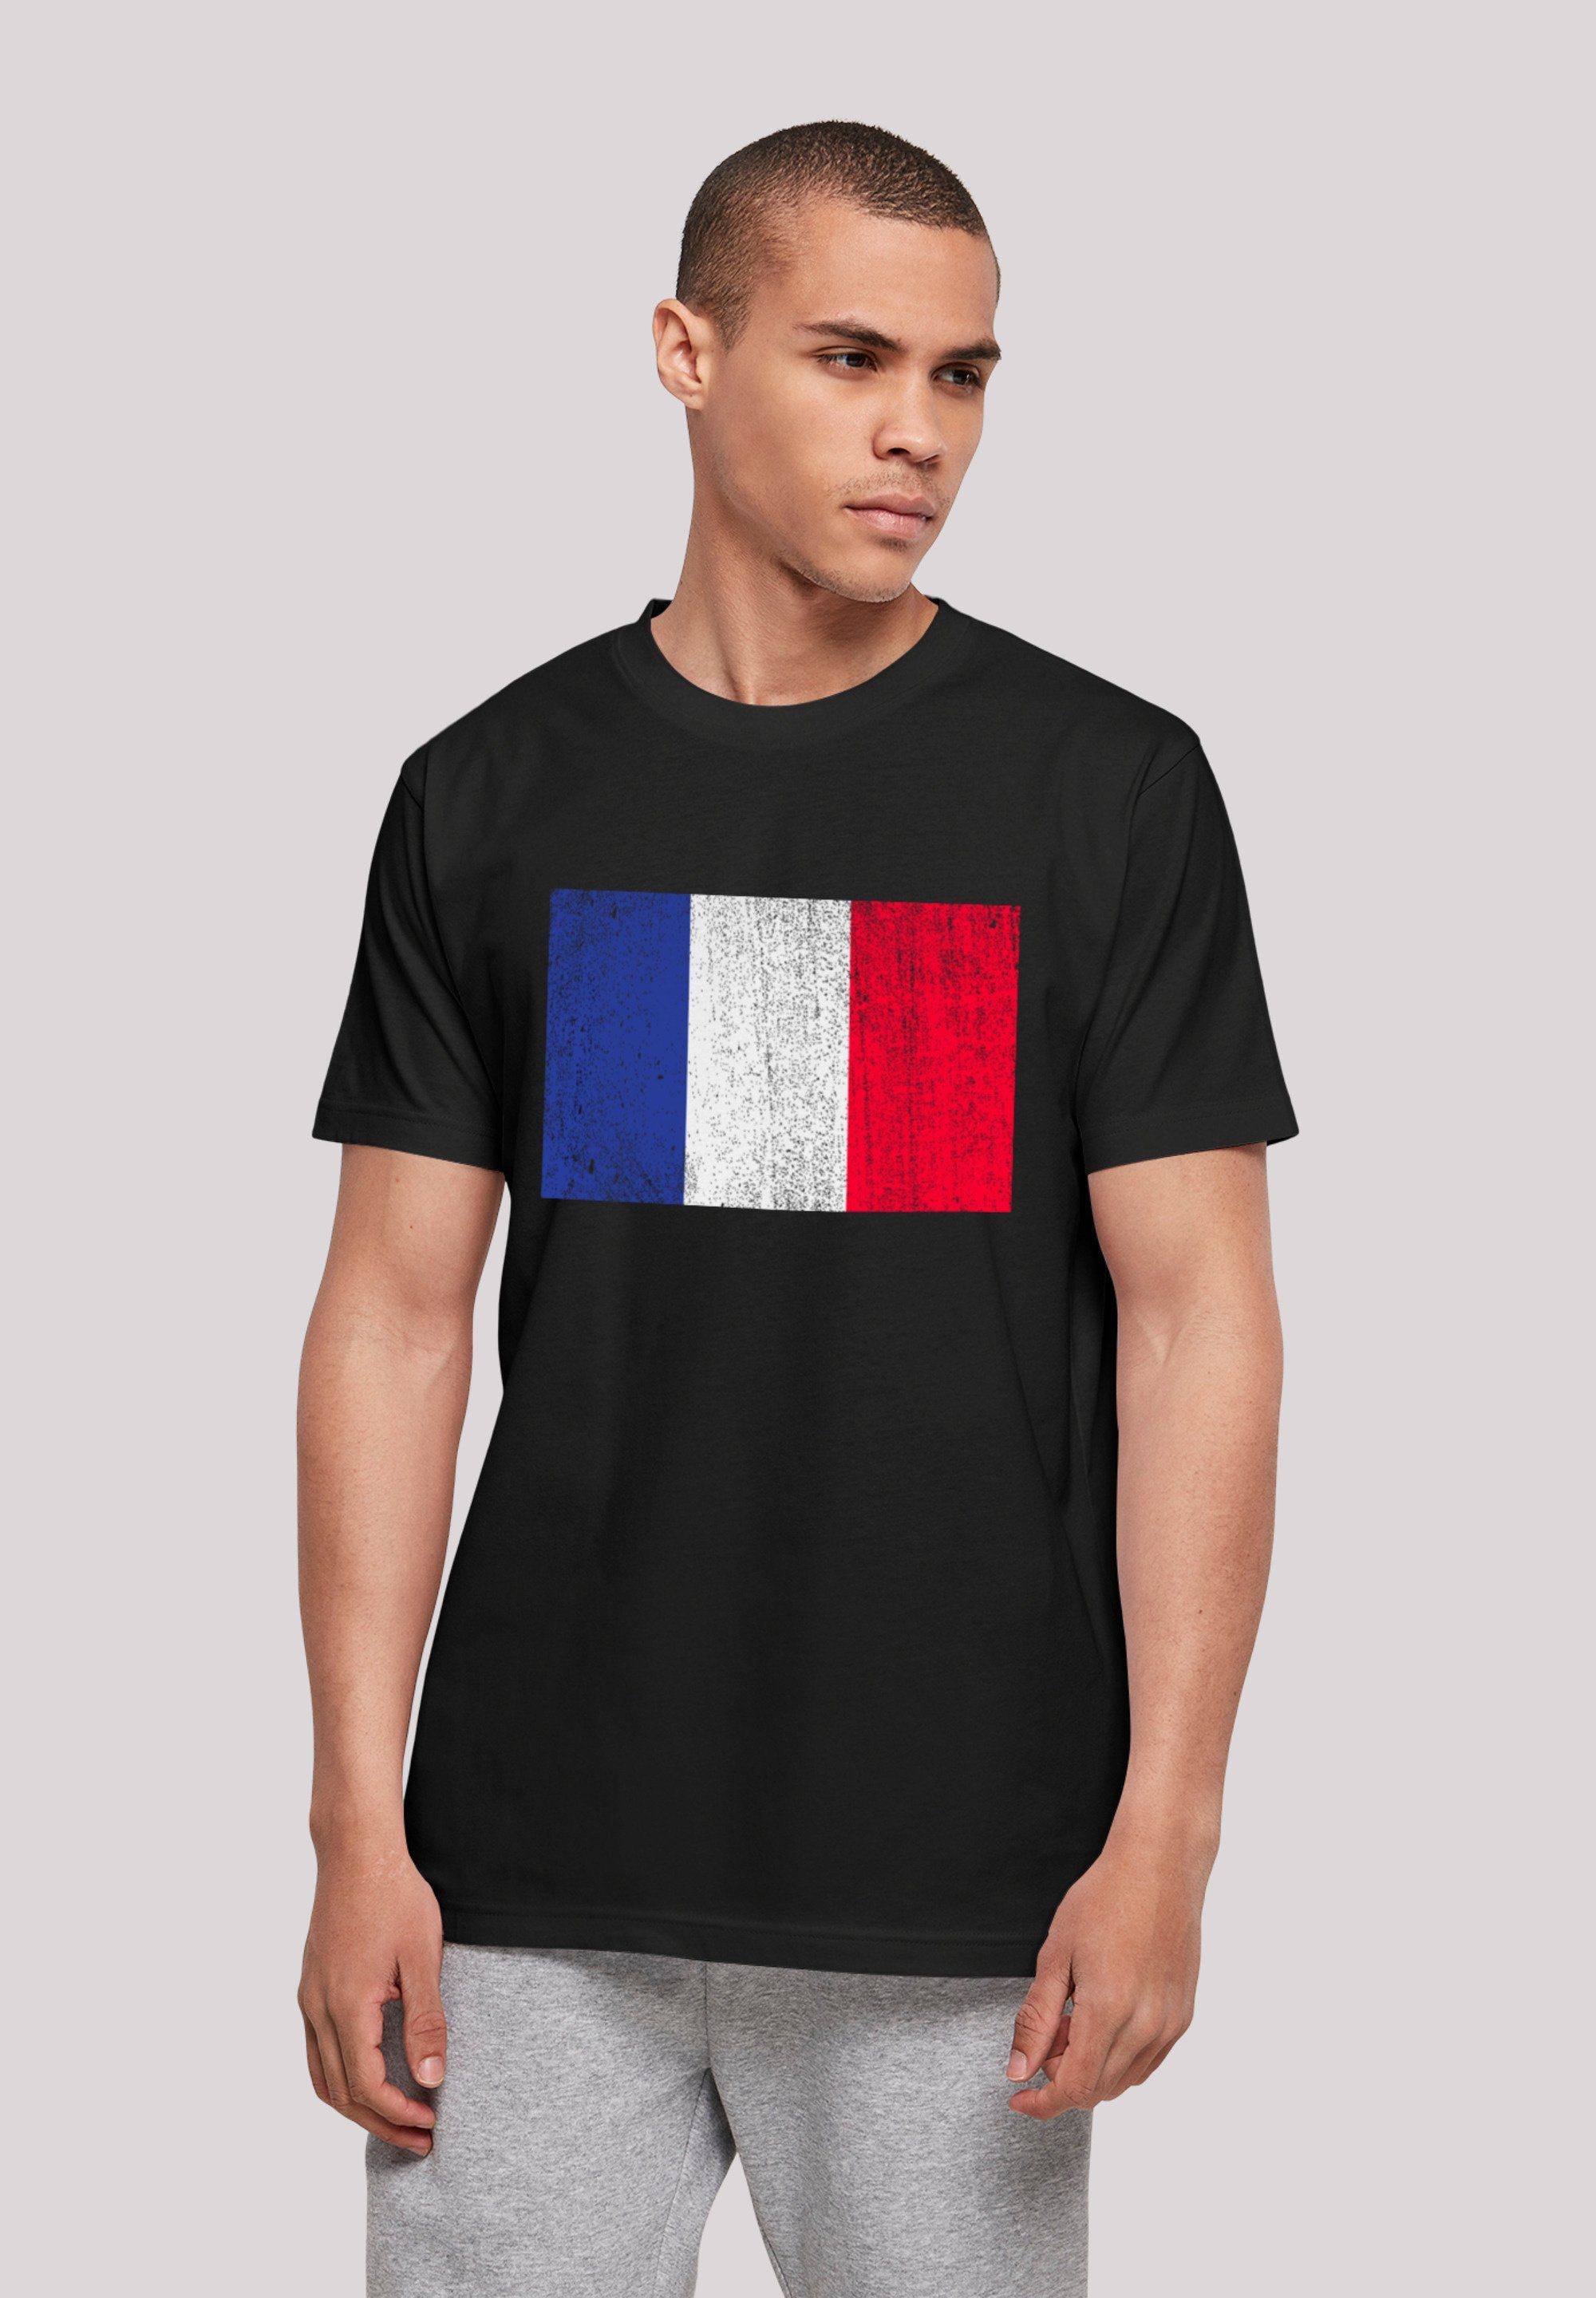 F4NT4STIC T-Shirt Frankreich Print distressed France Flagge